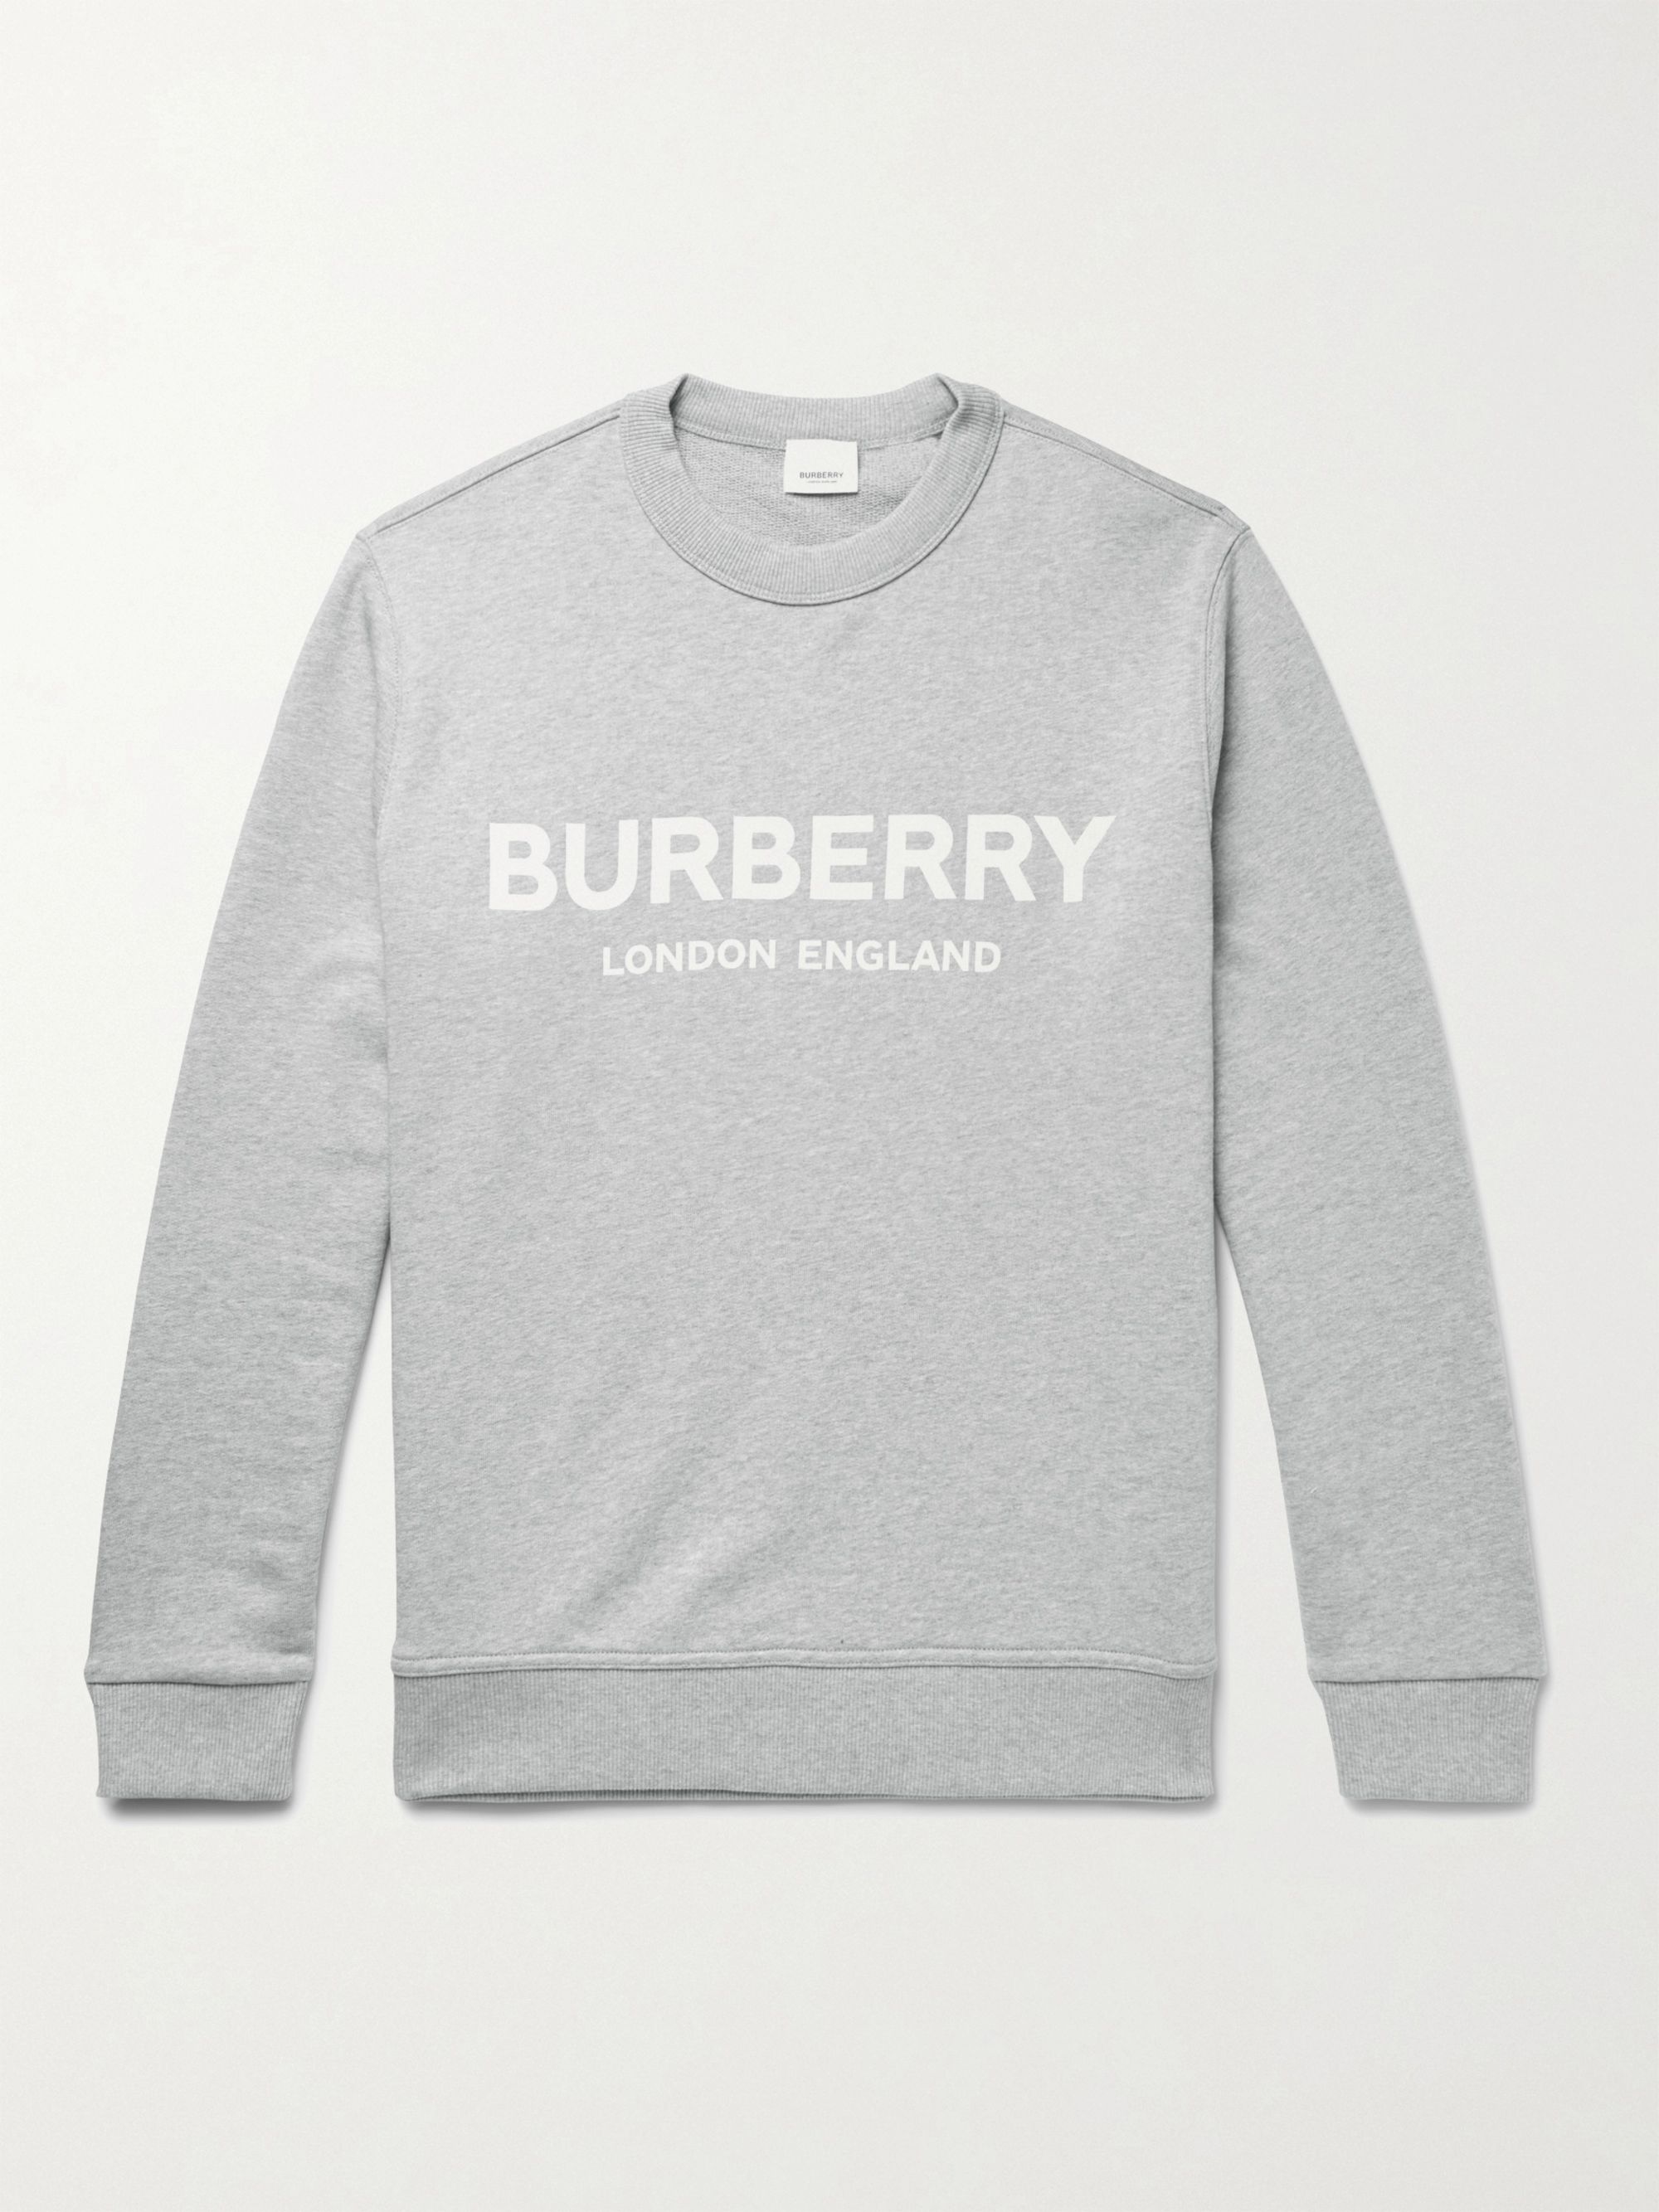 burberry sweater logo